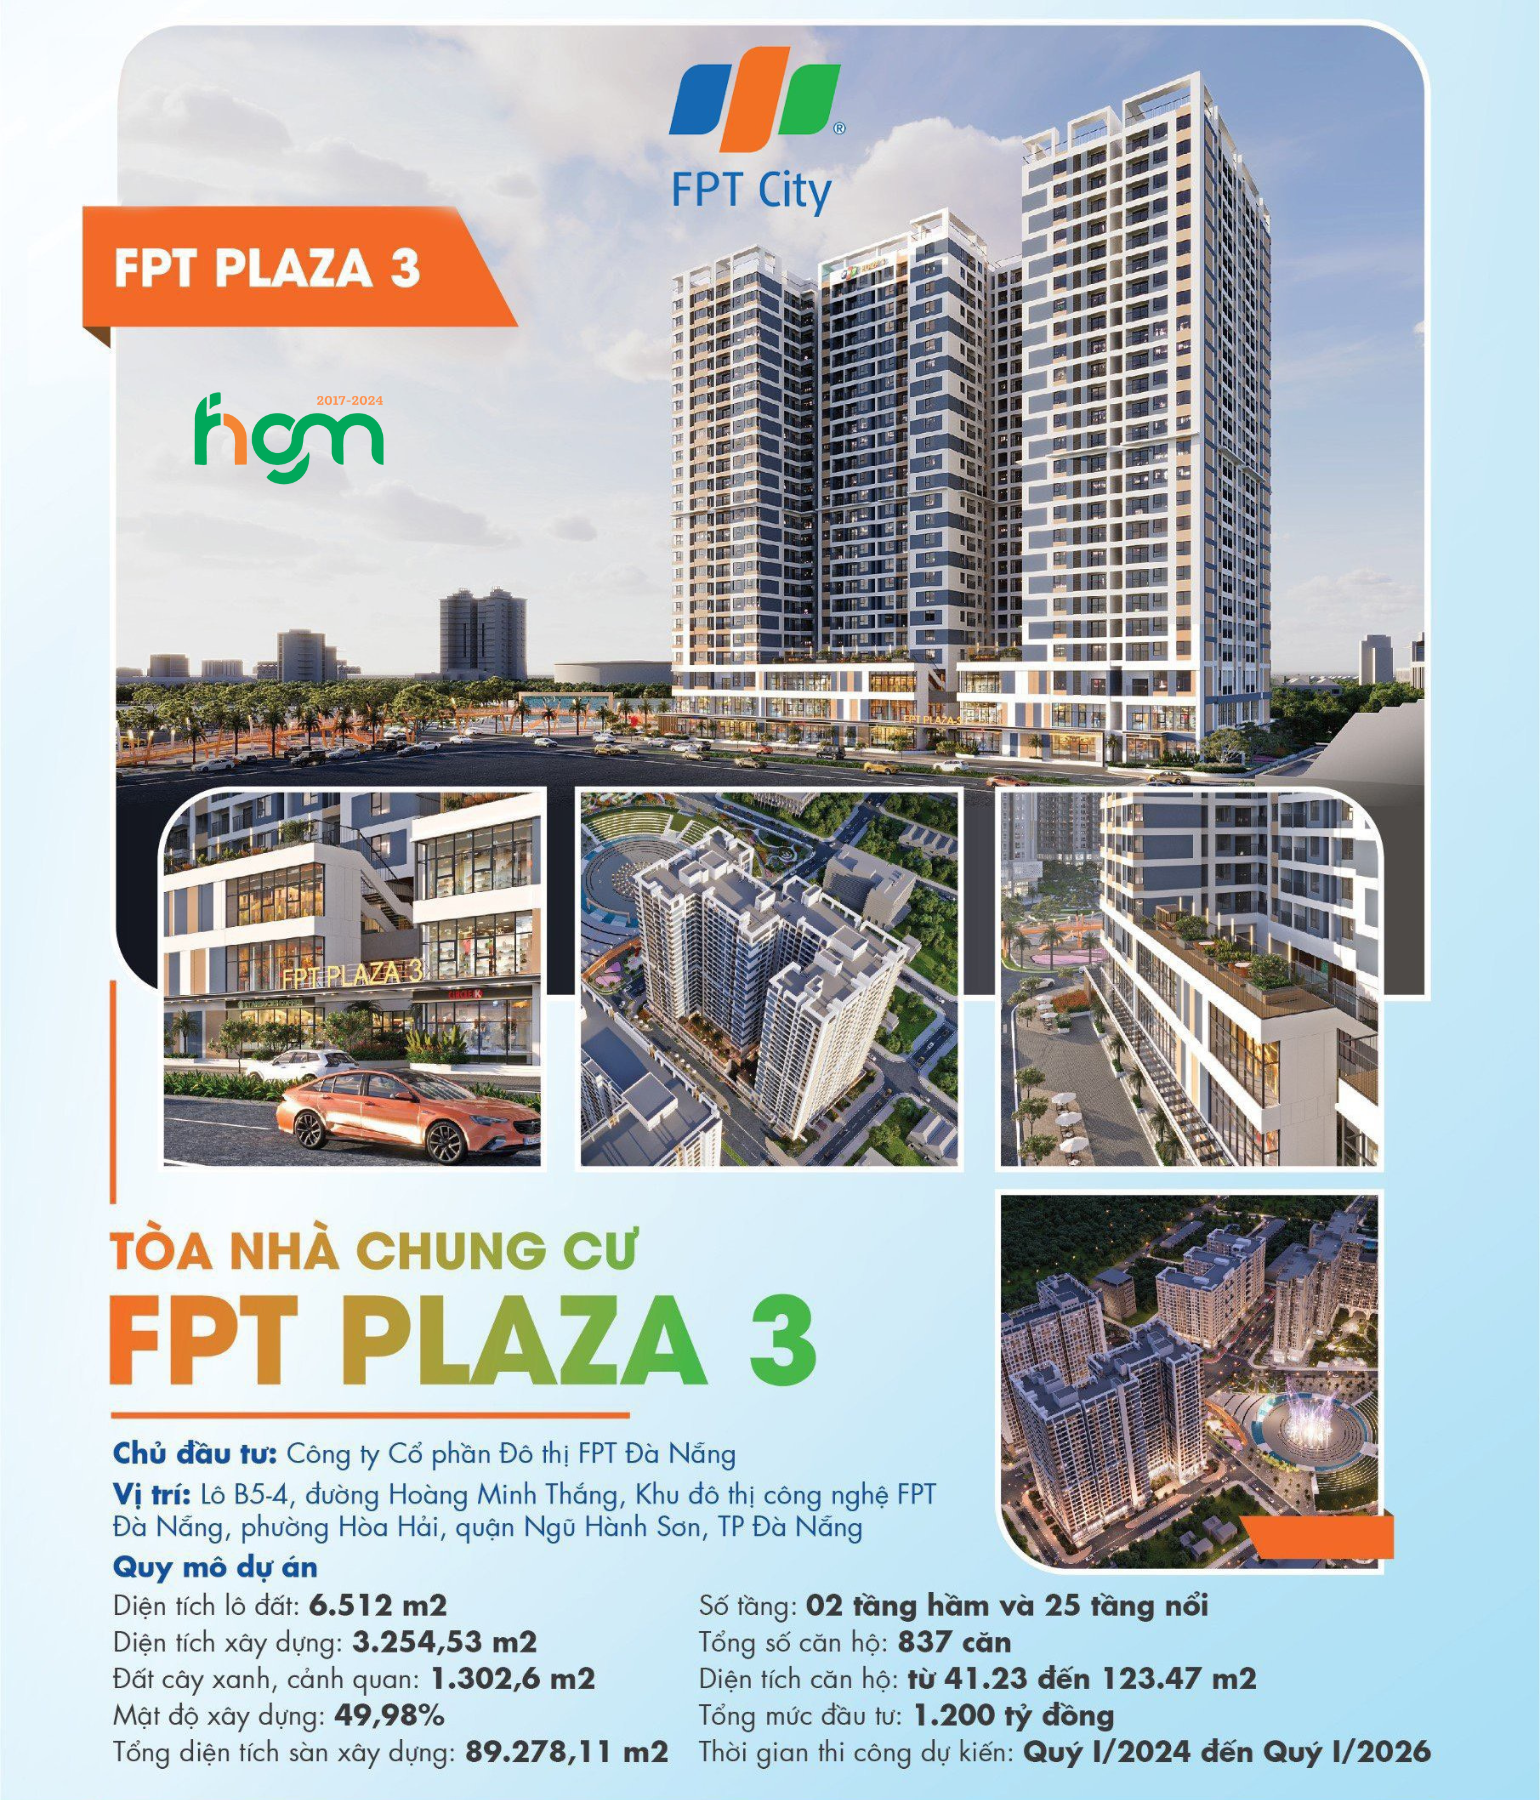 FPT Plaza 3